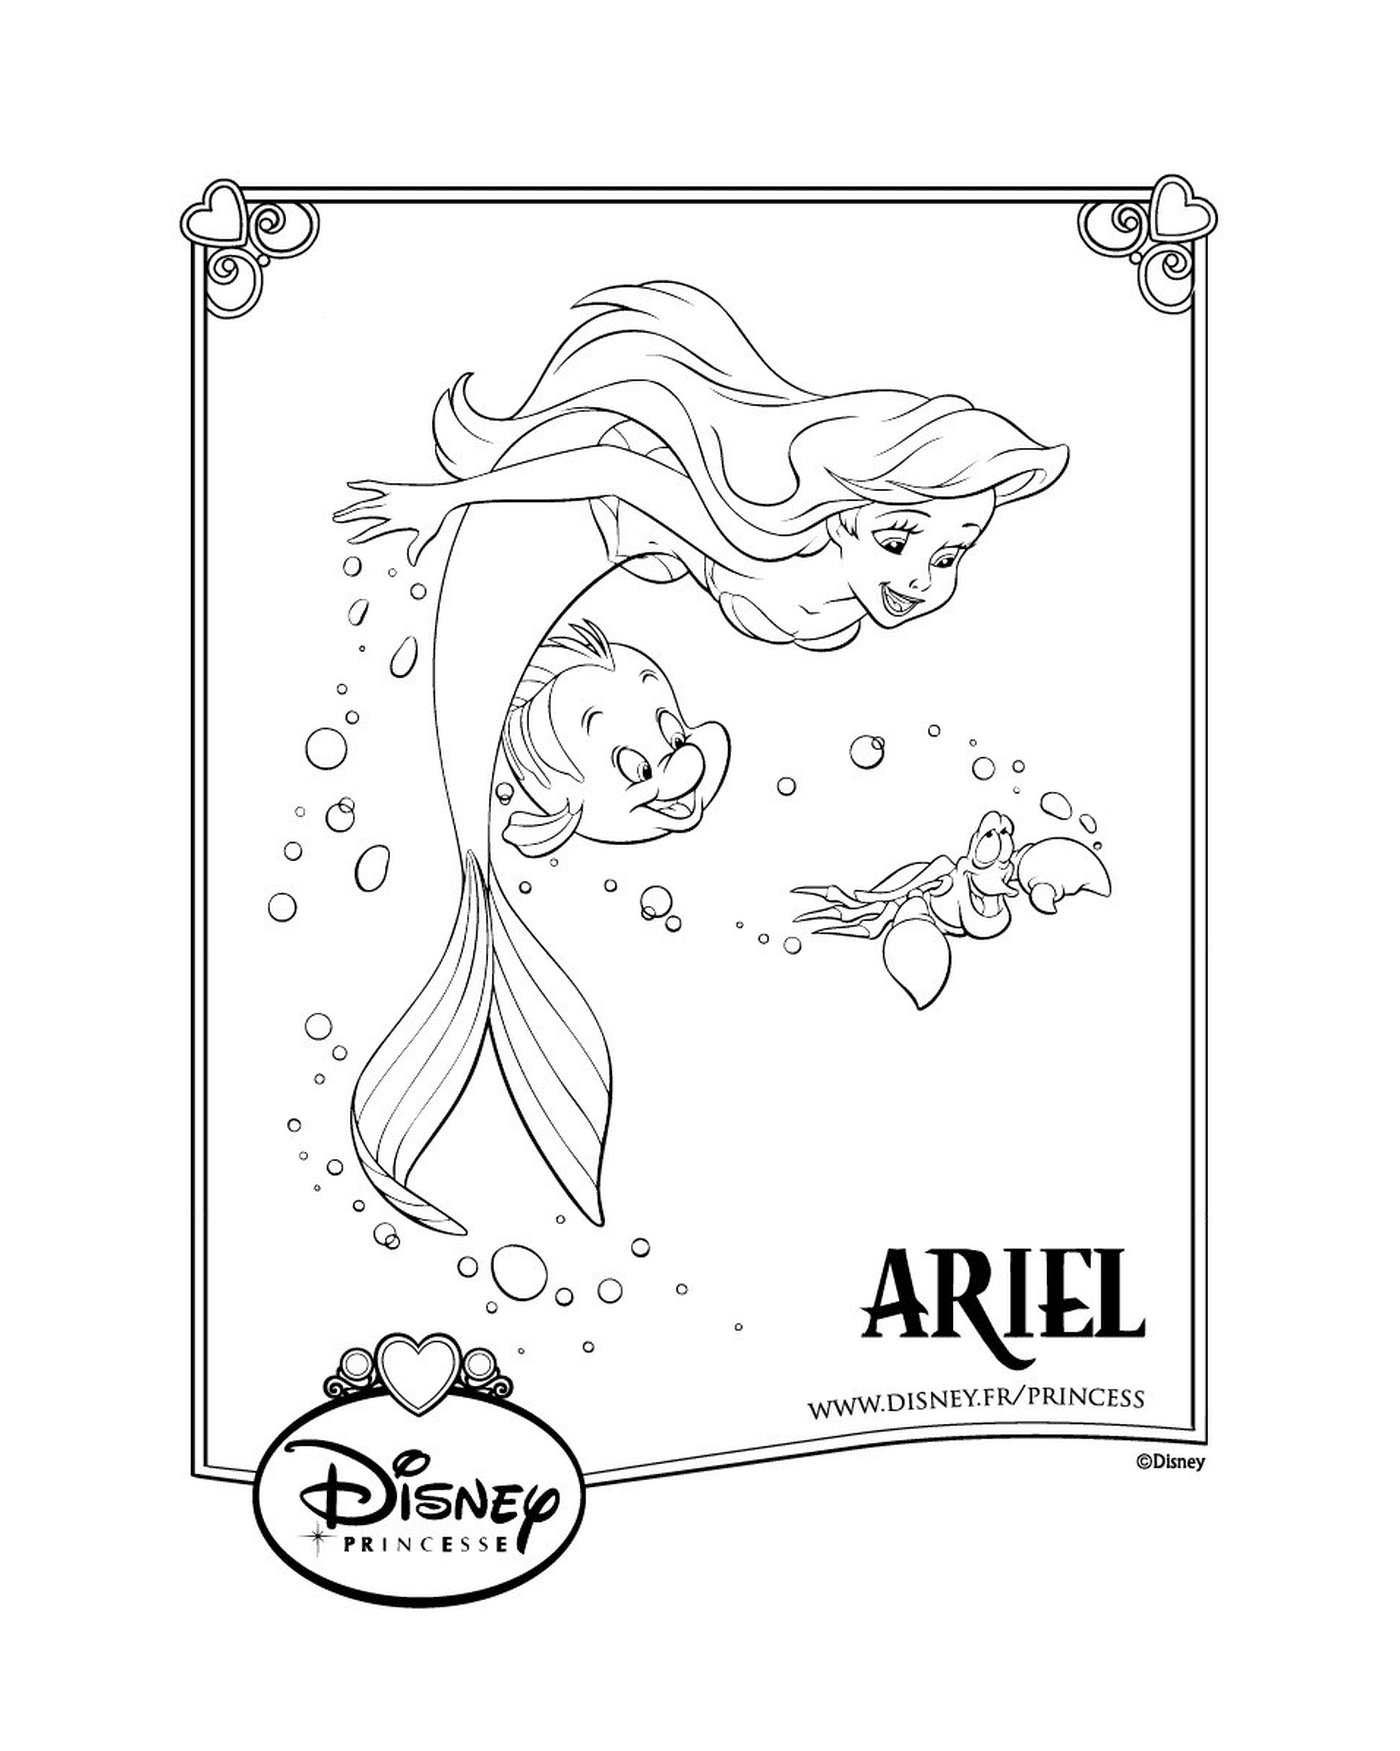  Ariel, la sirena di Disney, principessa 